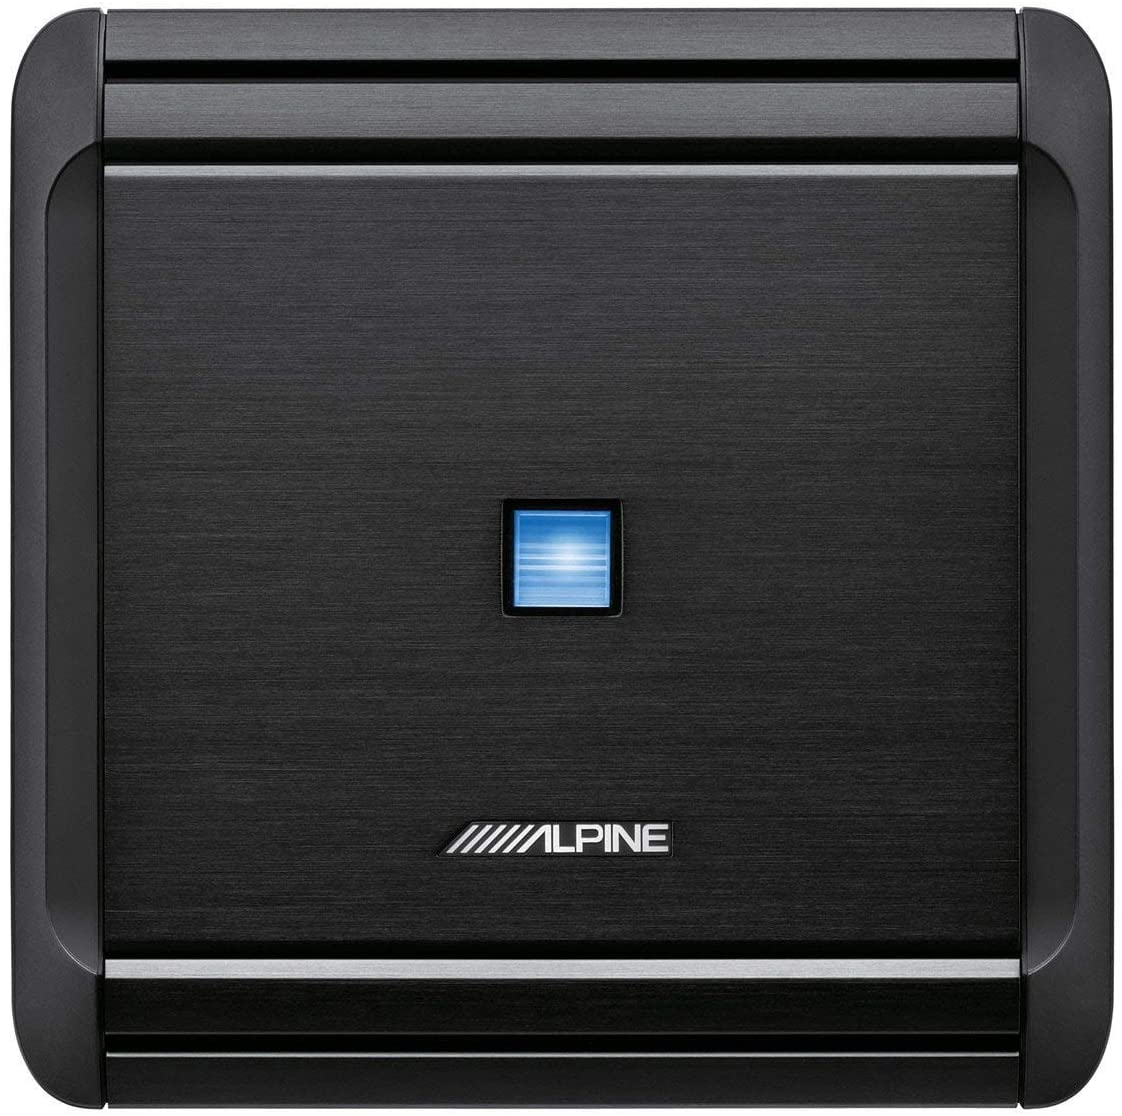 Alpine MRV-F300 Amplifier Best 4 Channel Amplifiers Under $200